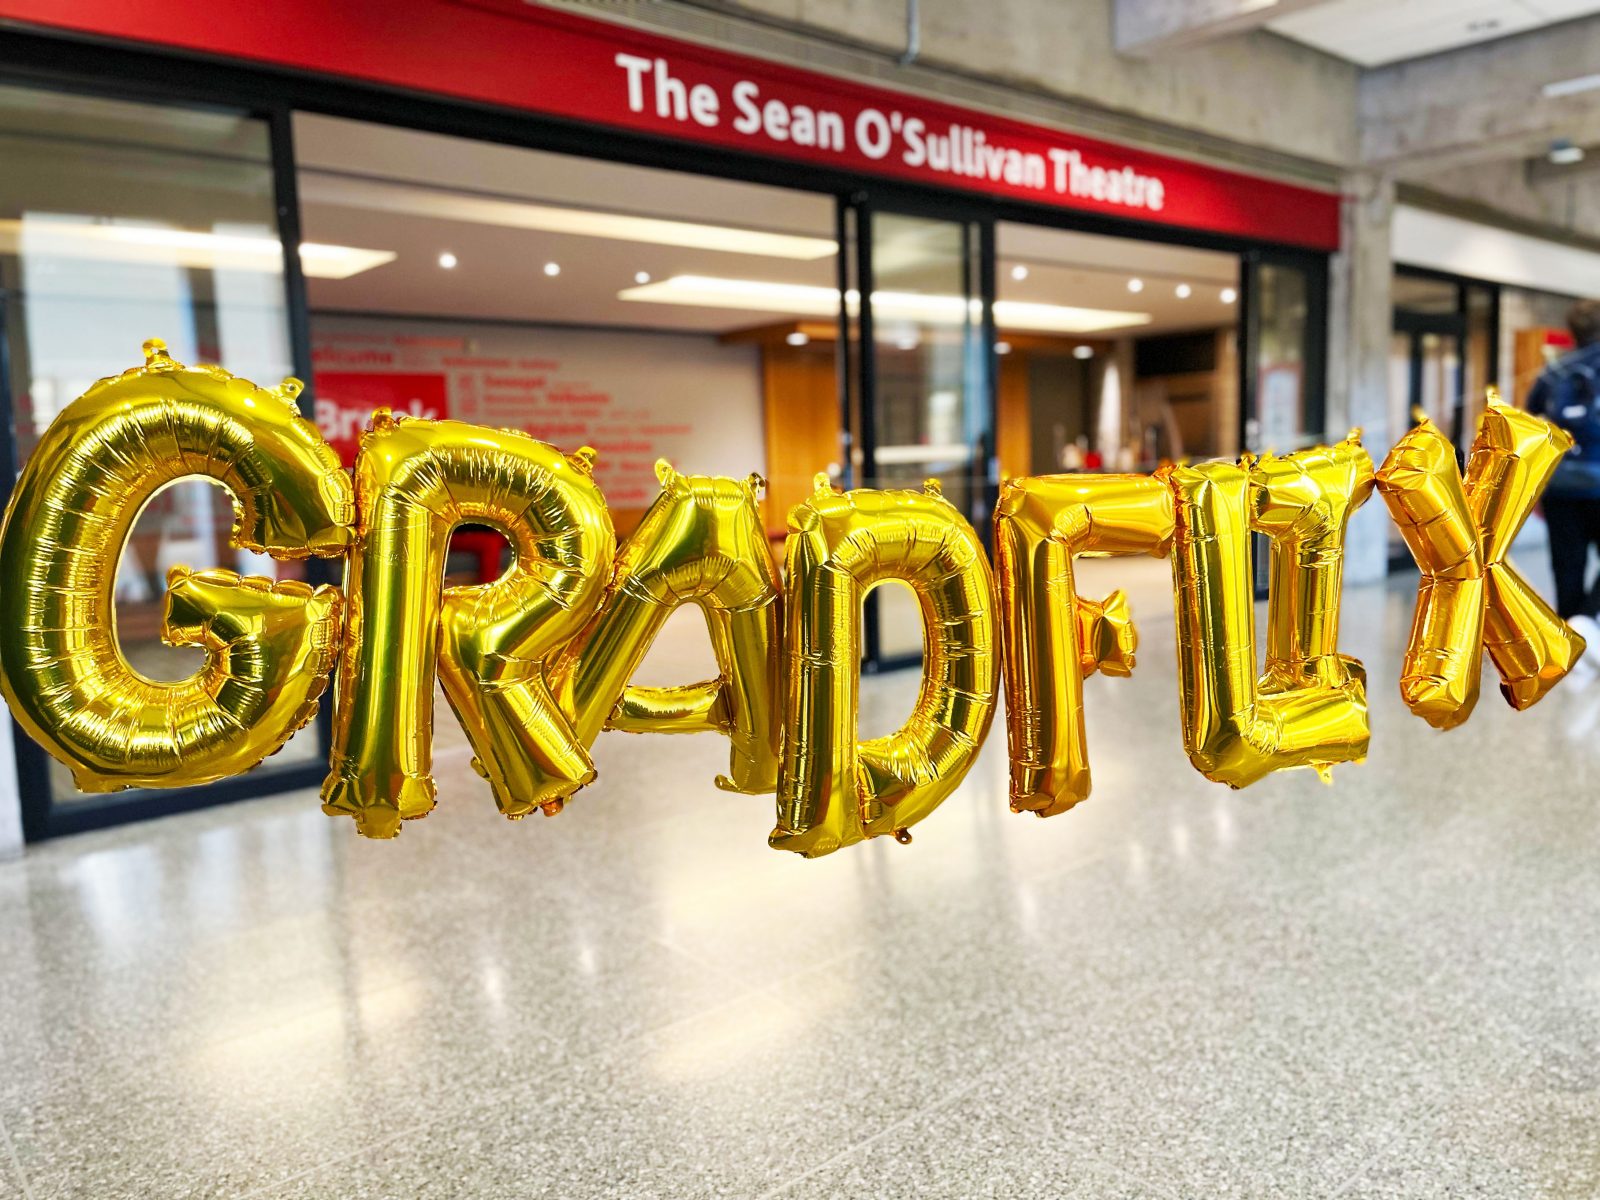 Gold GRADFlix balloons in front of Sean O’Sullivan theatre on Brock’s main campus.